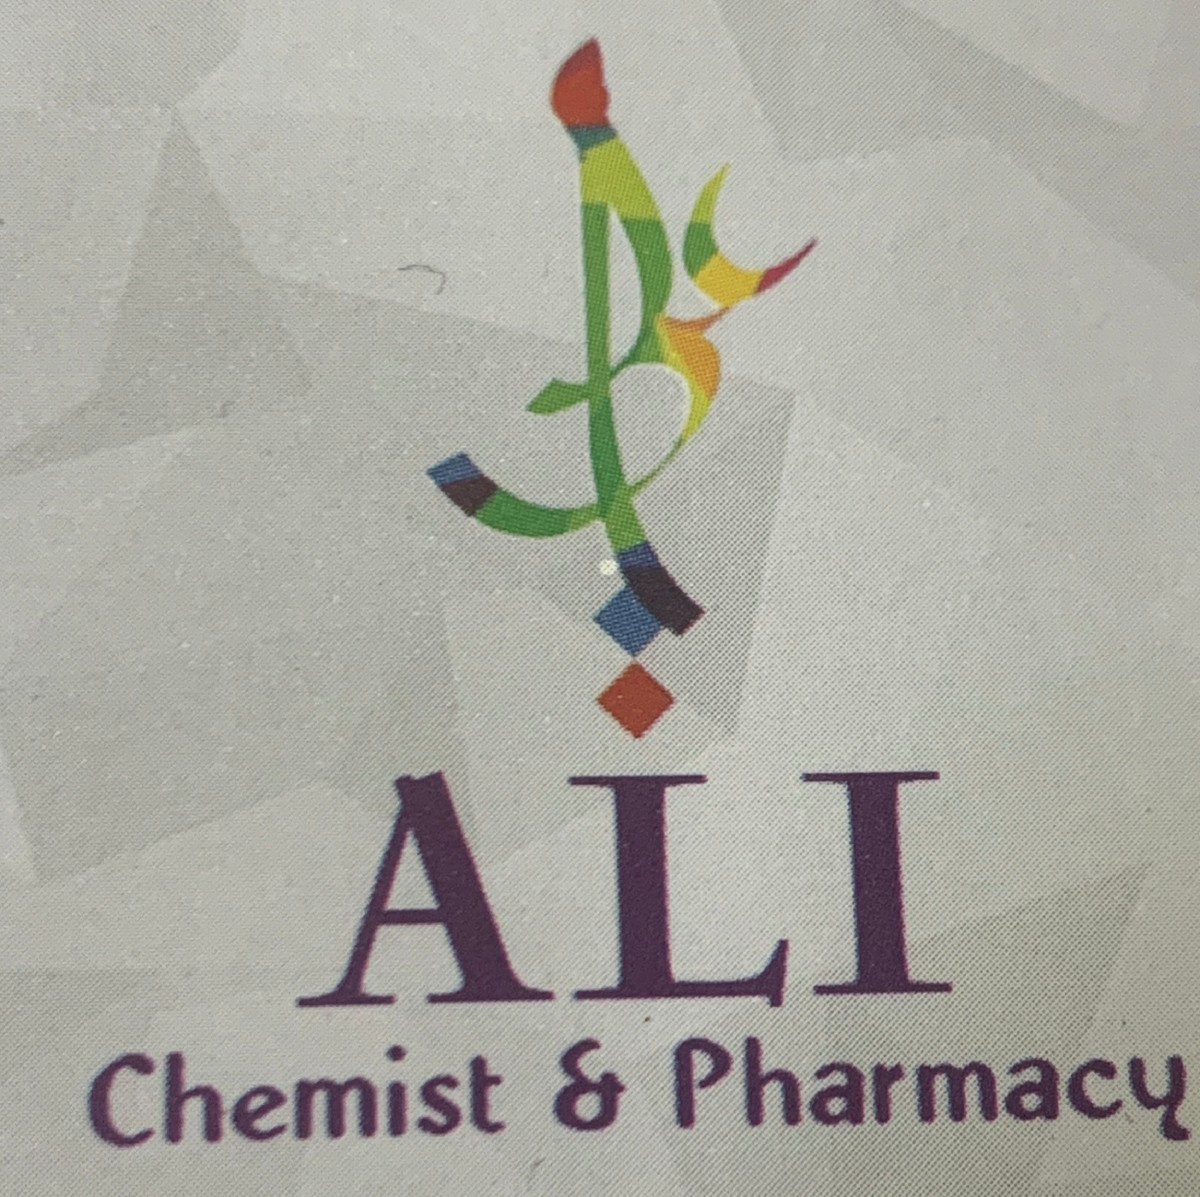 Ali Chemist & Pharmacy 